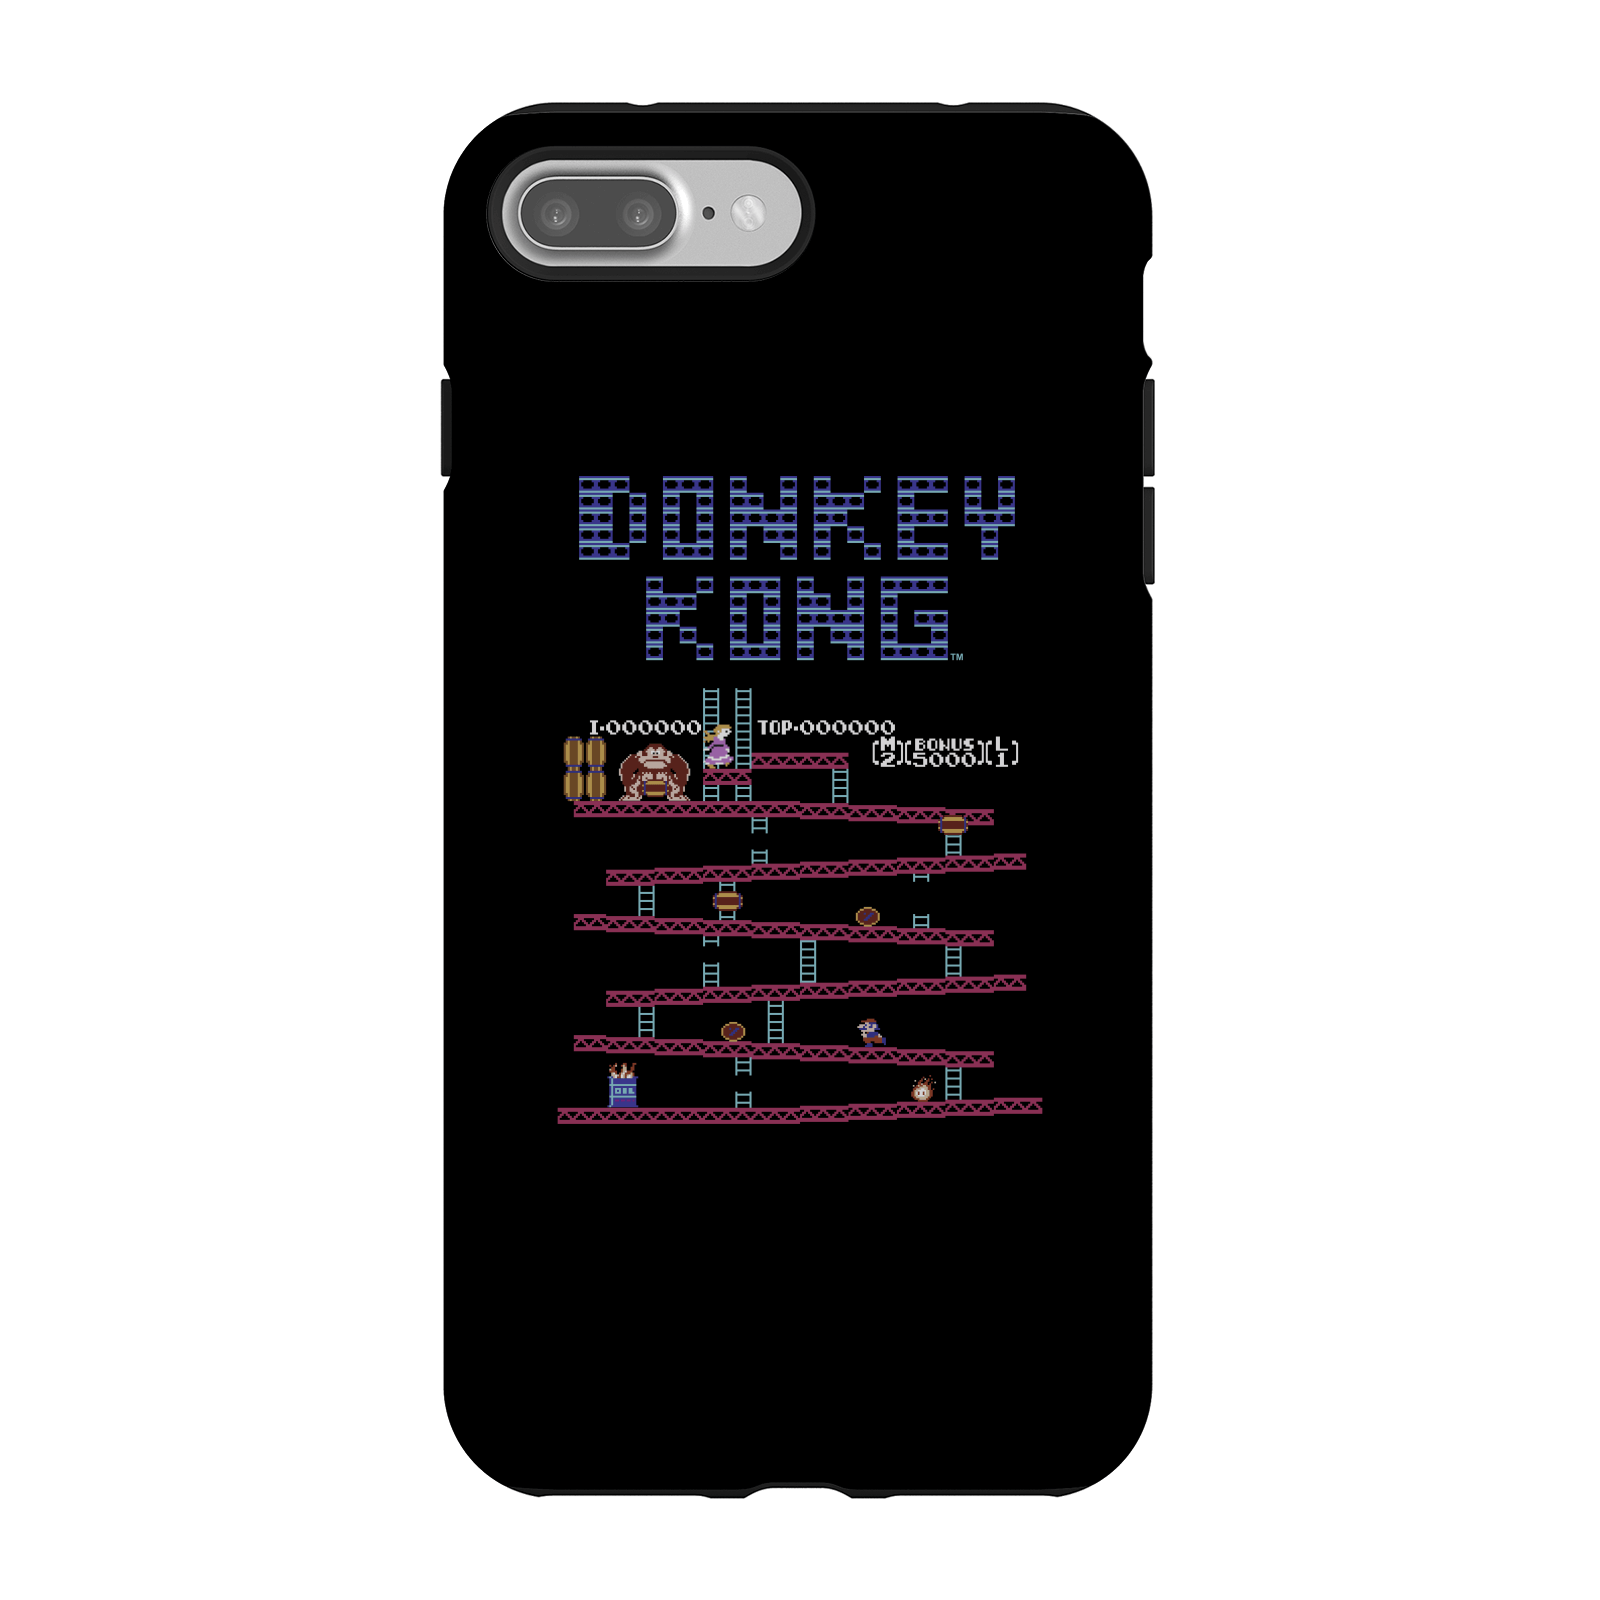 Nintendo Donkey Kong Retro Phone Case - iPhone 7 Plus - Tough Case - Matte